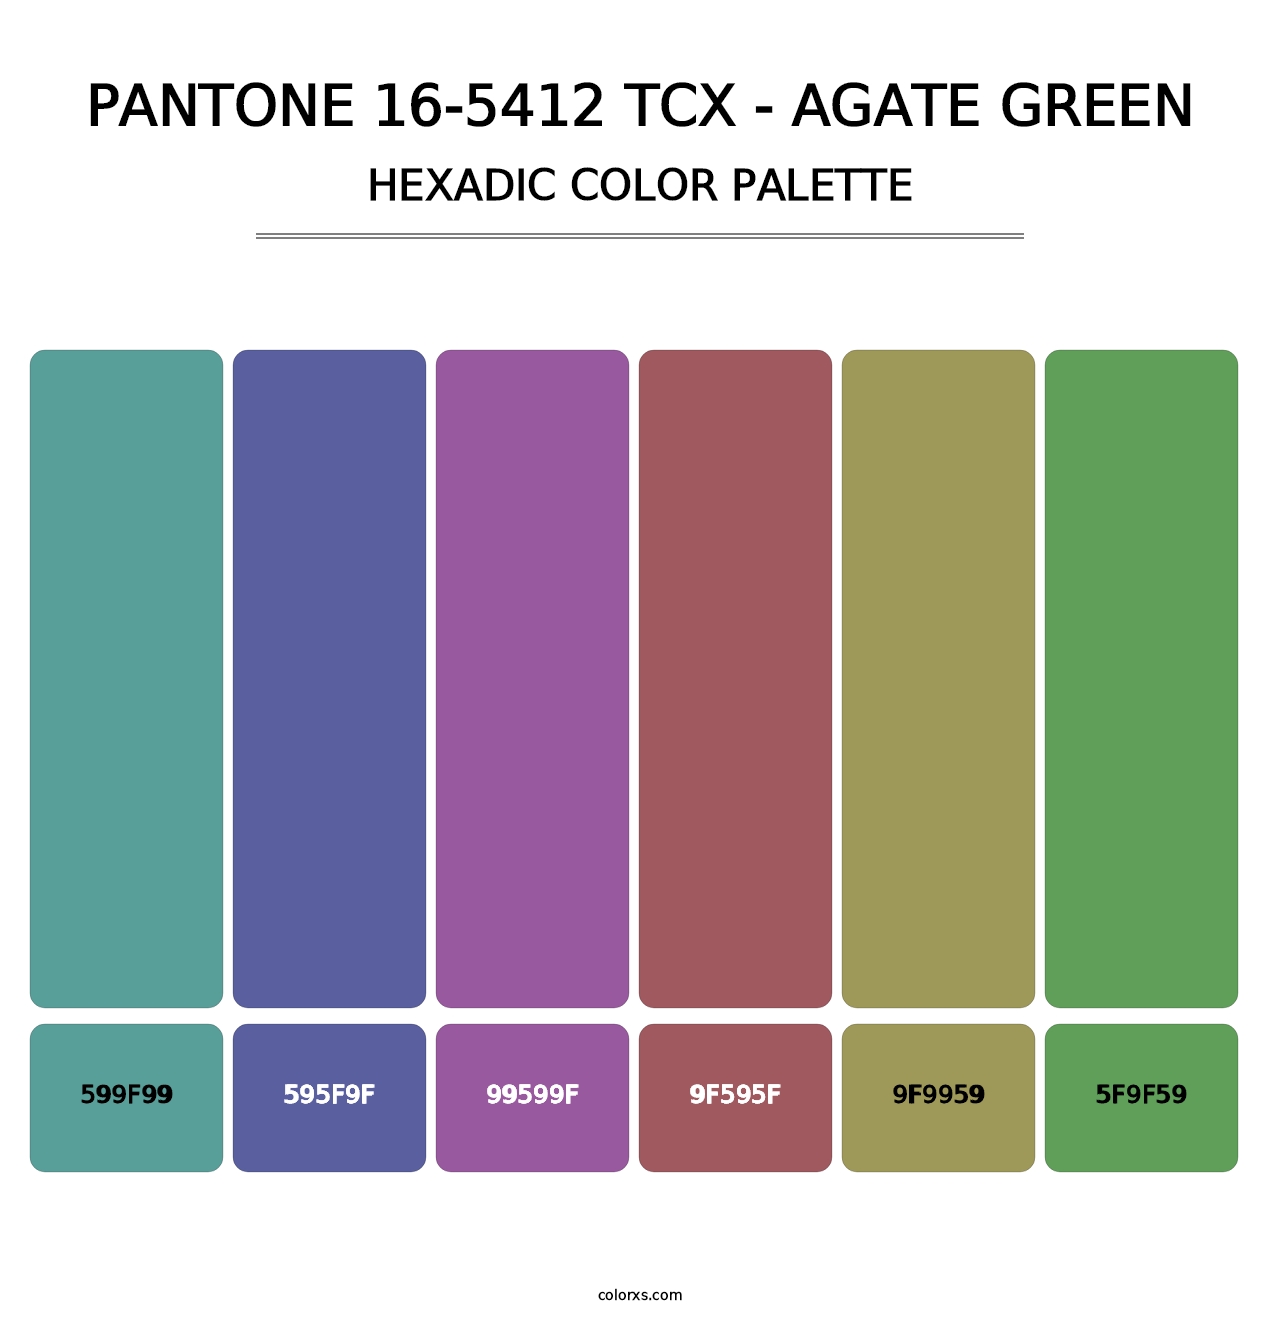 PANTONE 16-5412 TCX - Agate Green - Hexadic Color Palette